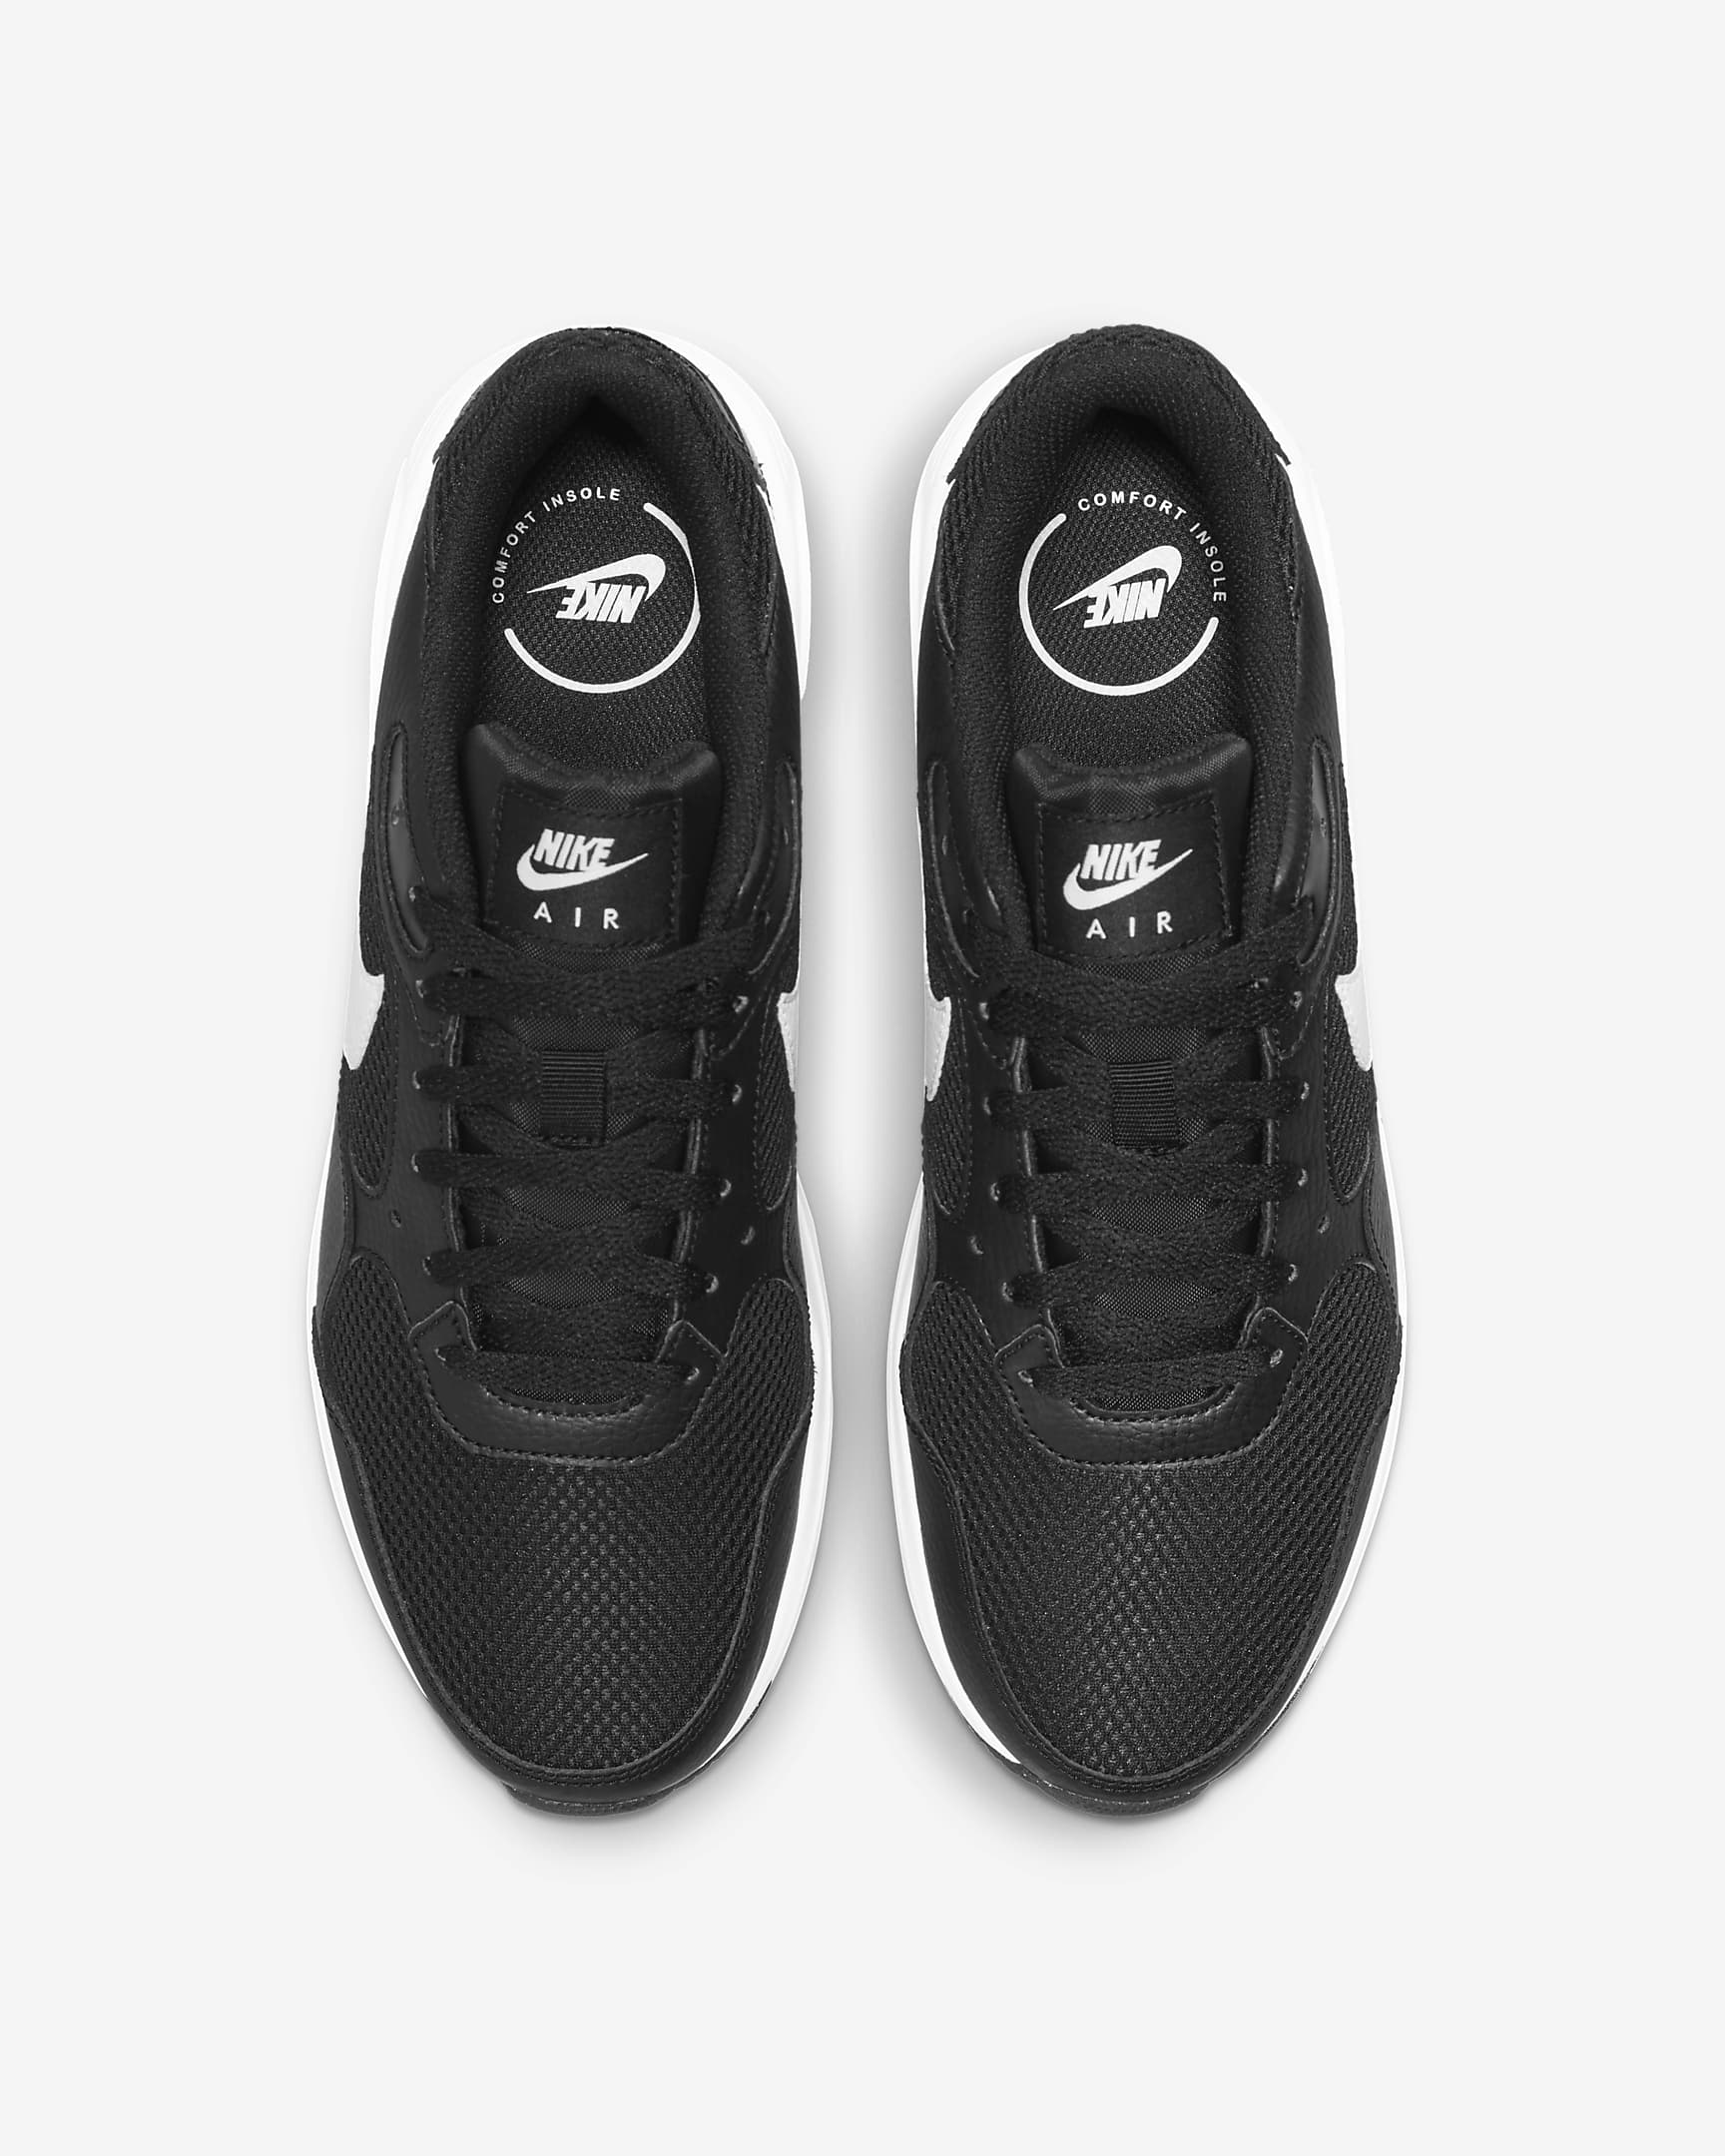 Nike Nike Air Max Sc (gs) negro zapatillas niños/as tallas 28-38.5